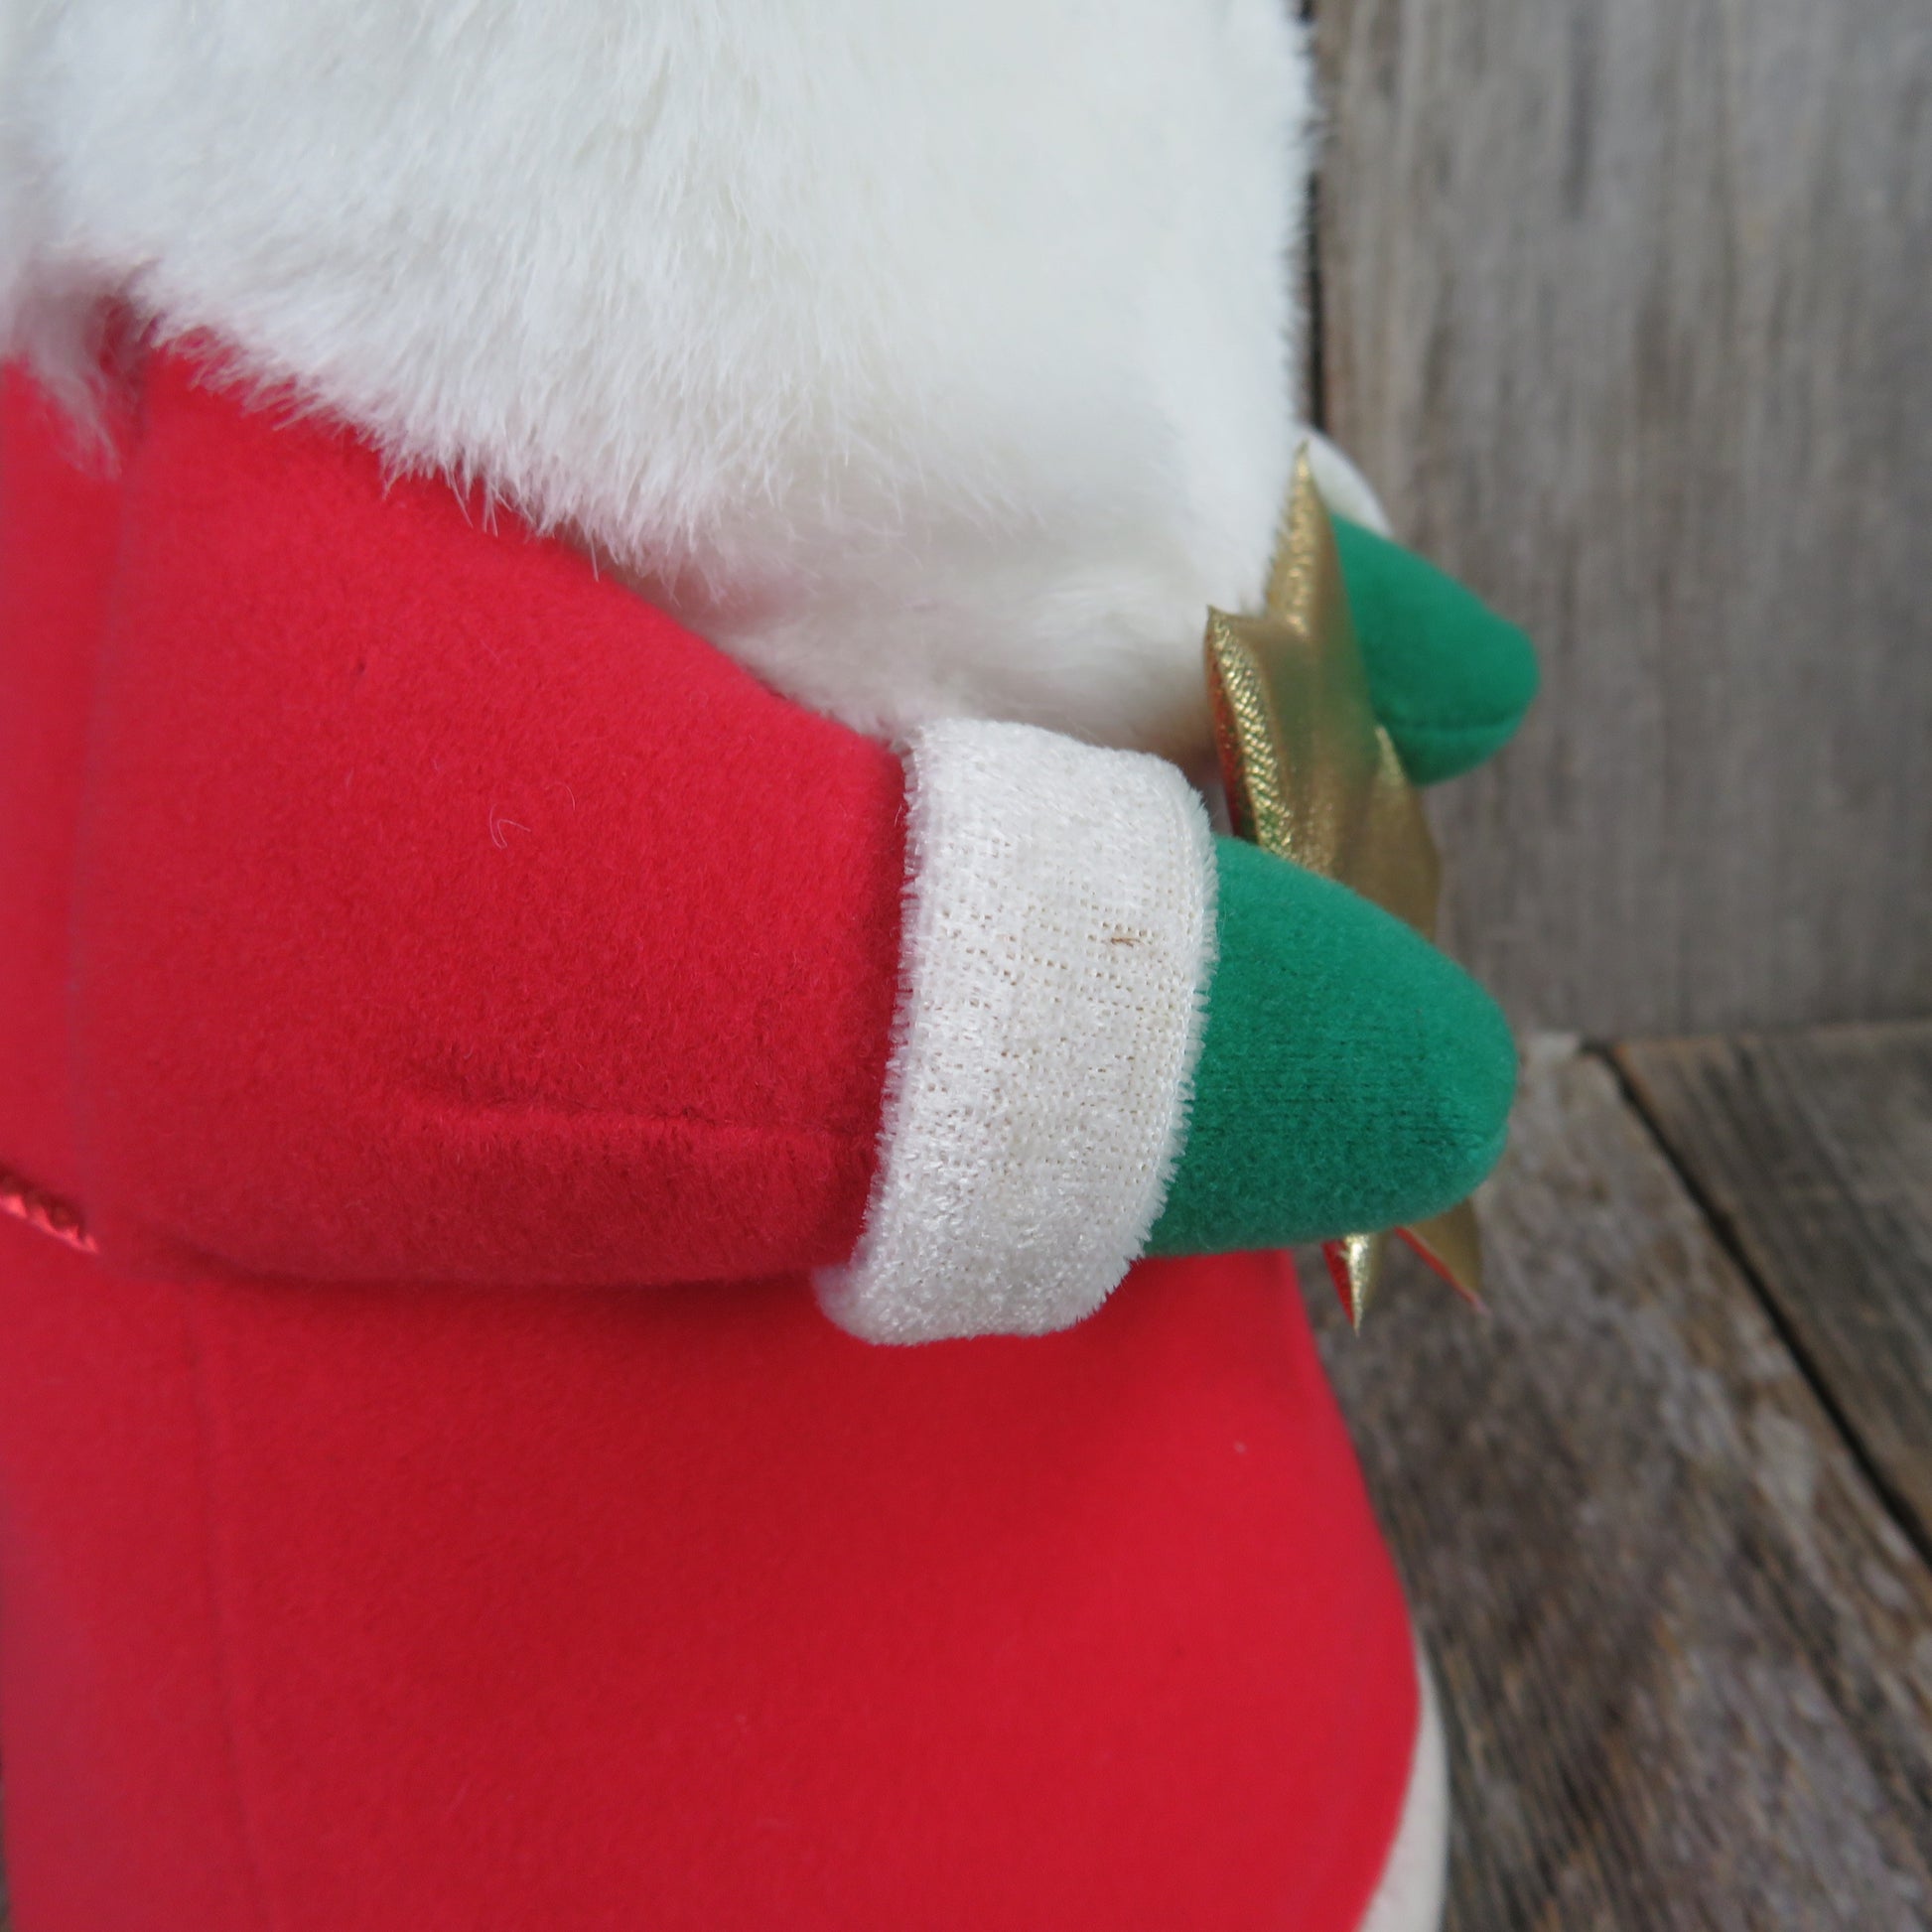 Vintage Santa Claus Christmas Tree Topper Plush Stuffed Hallmark Soft 1990s Red Bells - At Grandma's Table